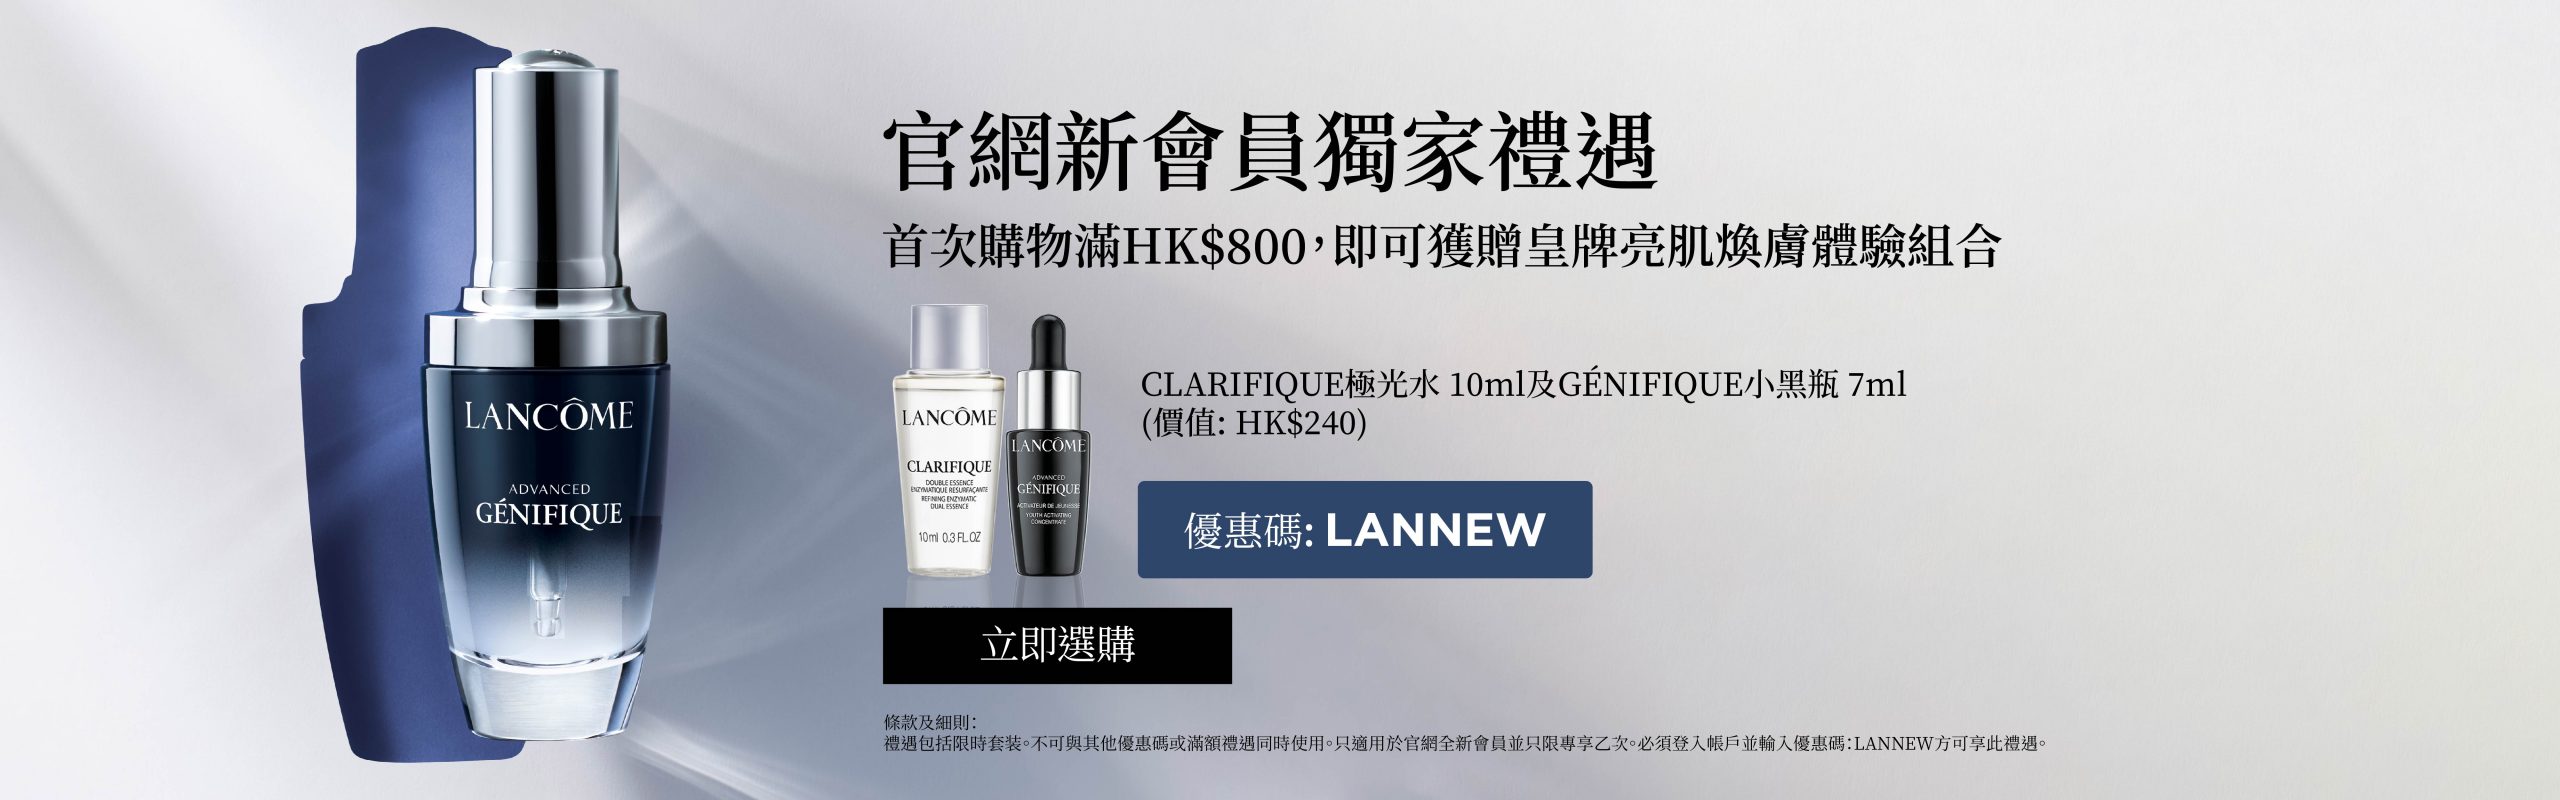 Lancome 小黑瓶 極光水 護膚品 化妝品 限時 優惠 折扣 代碼 優惠碼 Promo Discount Coupon Code